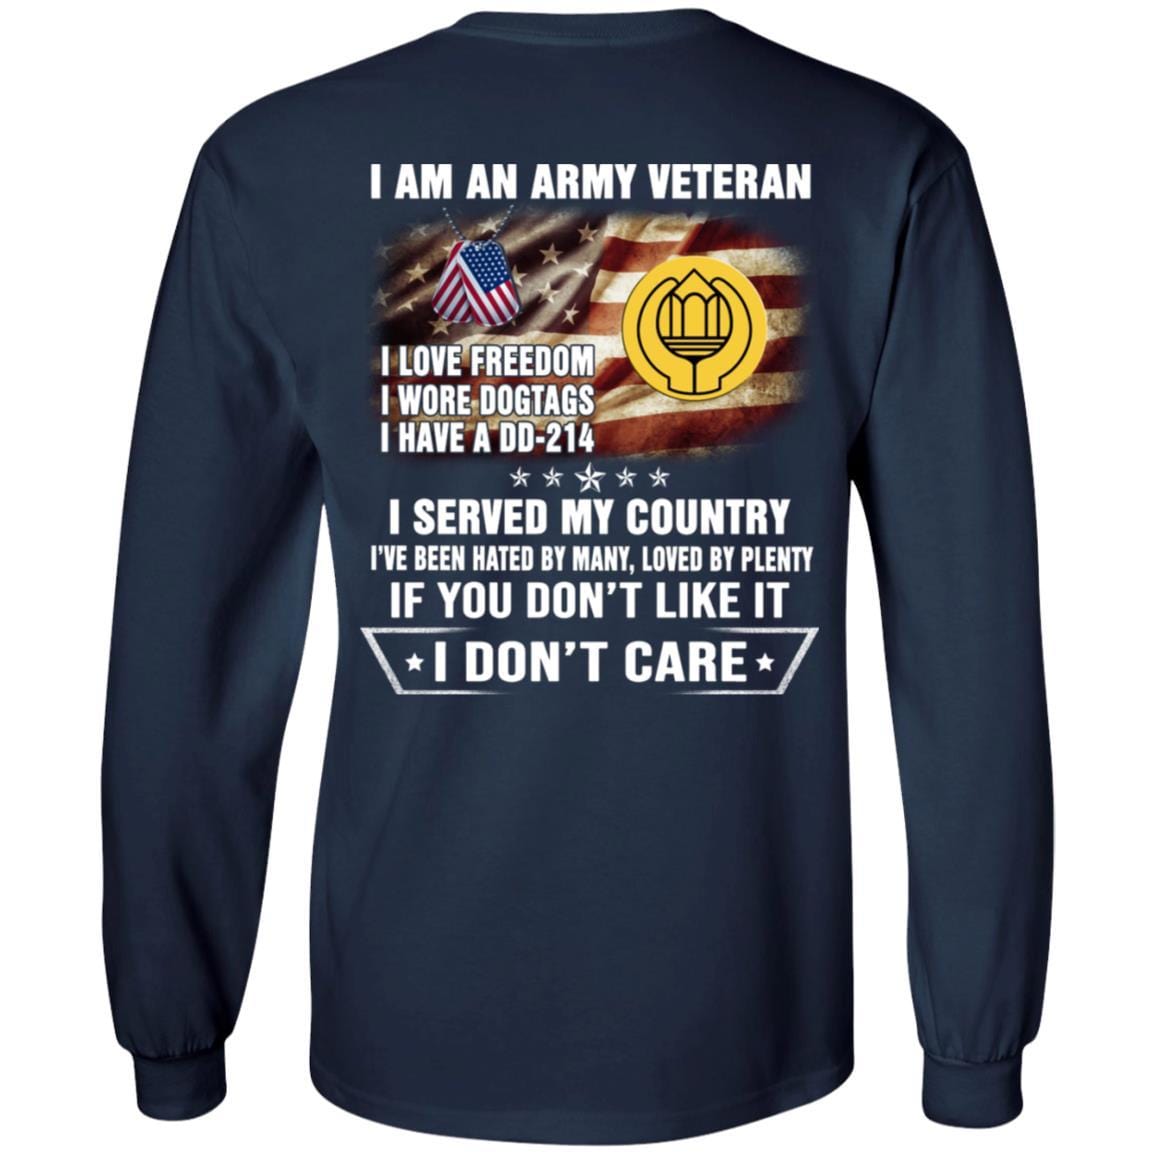 T-Shirt "I Am An Army Chaplain Assistant Veteran" On Back-TShirt-Army-Veterans Nation